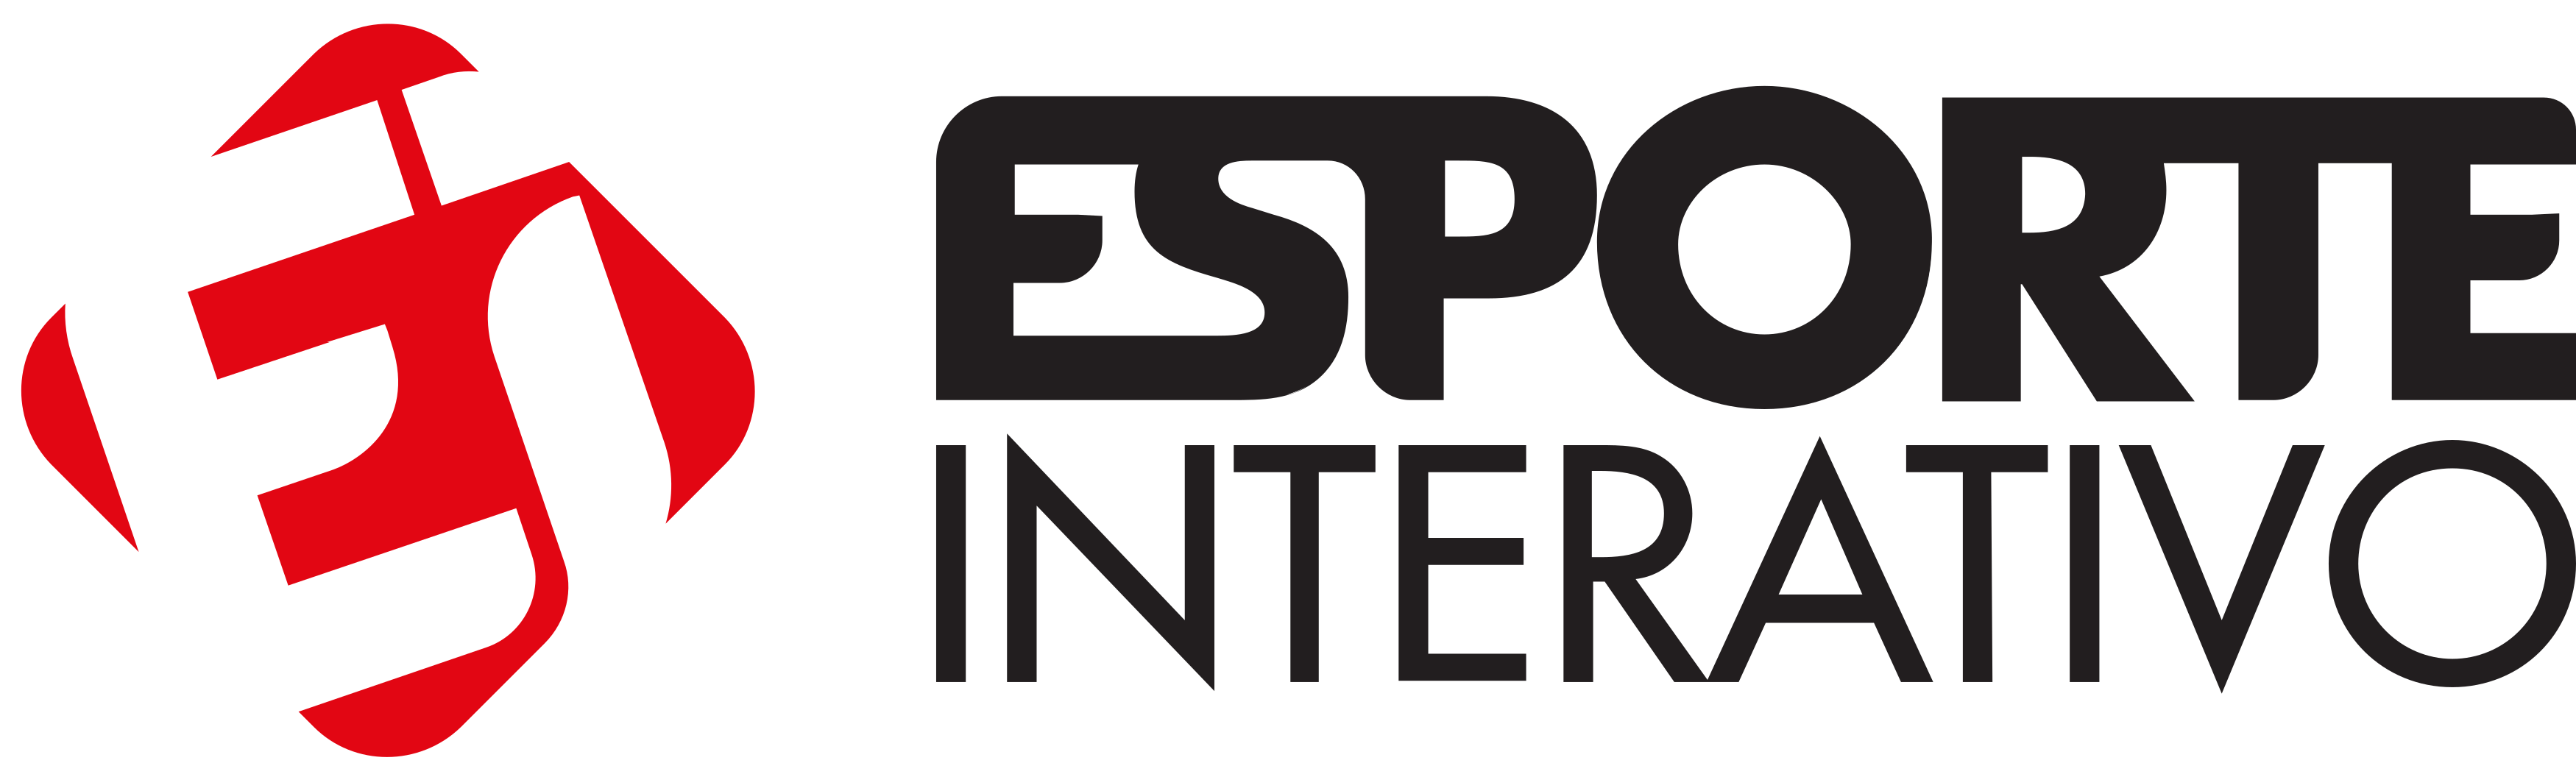 Esporte Interativo Logo Png E Vetor Download De Logo